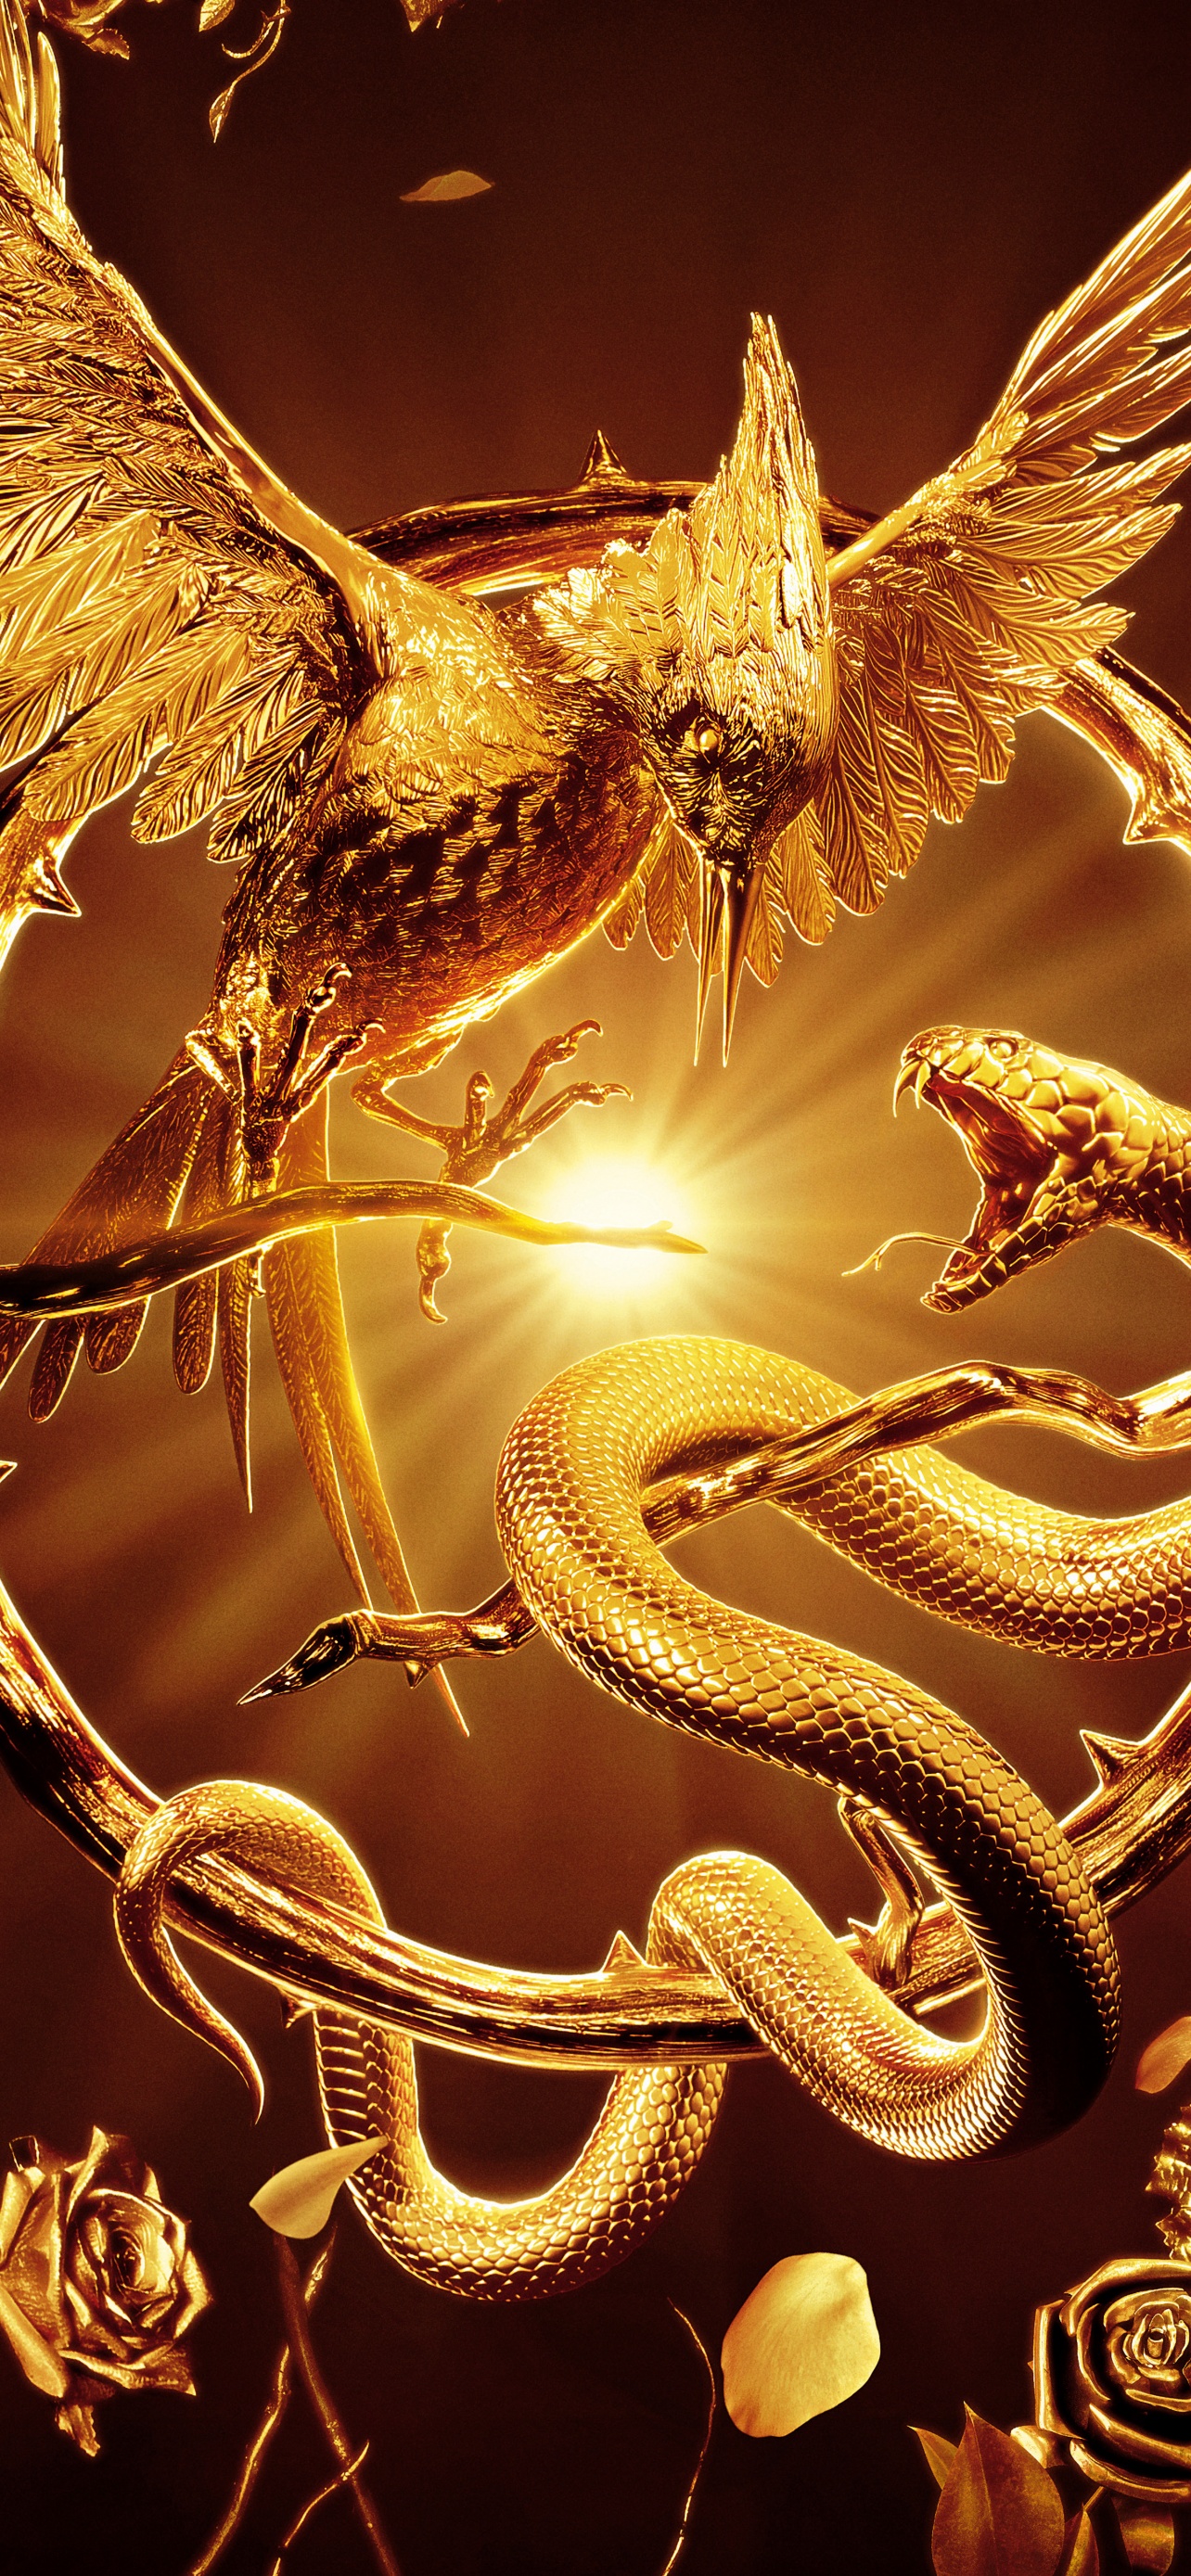 Hunger Games Mockingjay Part 1 Crew Banner - Stylish HD Wa… | Flickr